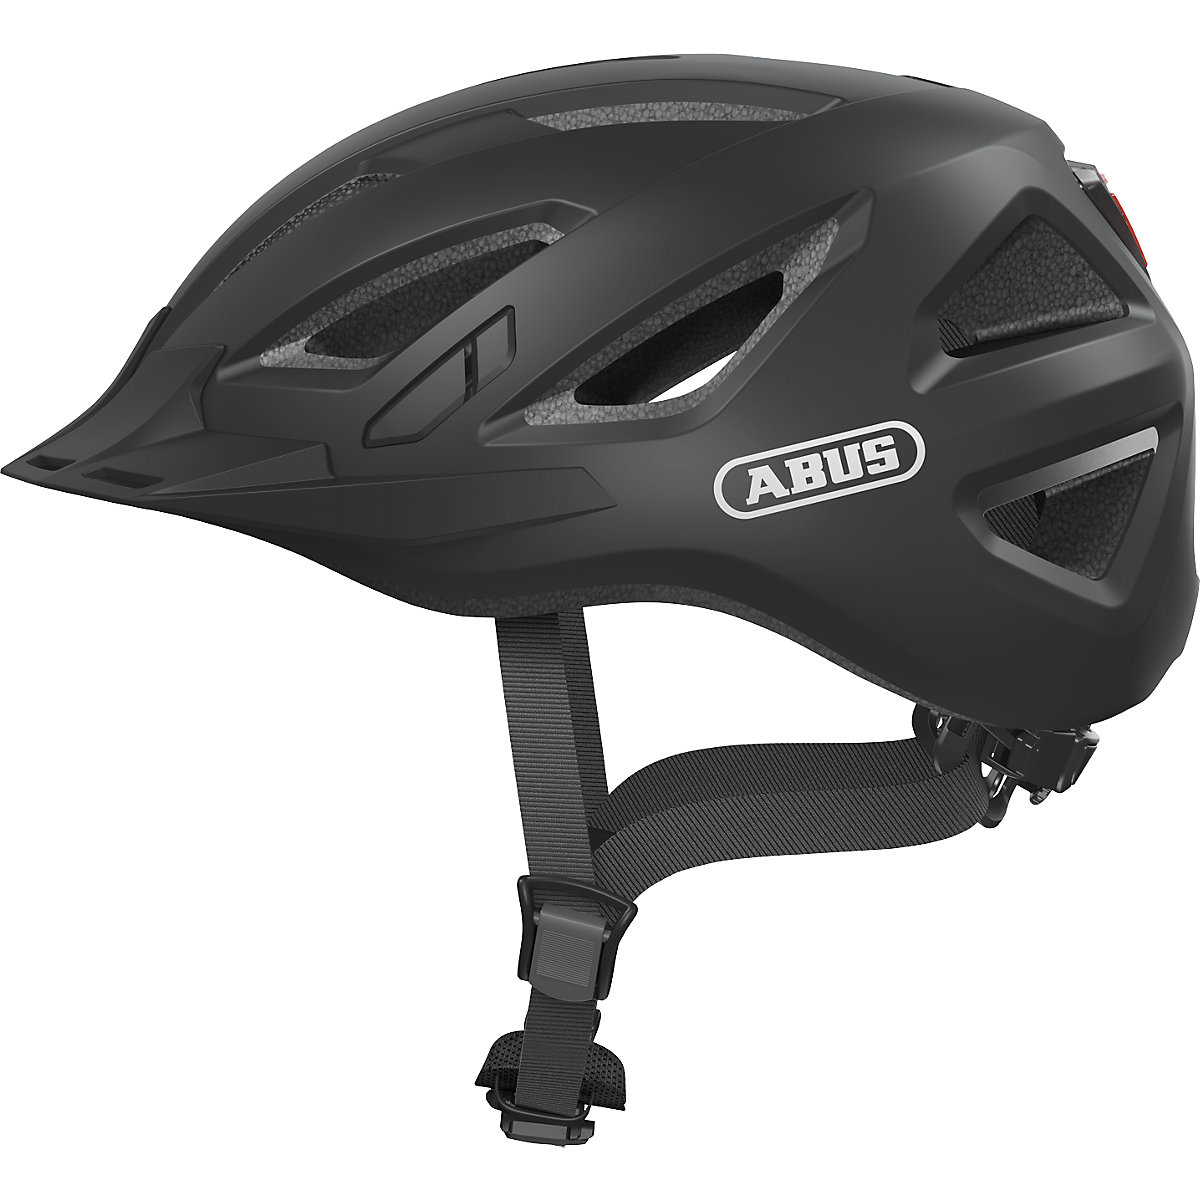 URBAN-I 3.0 bicycle helmet – ABUS